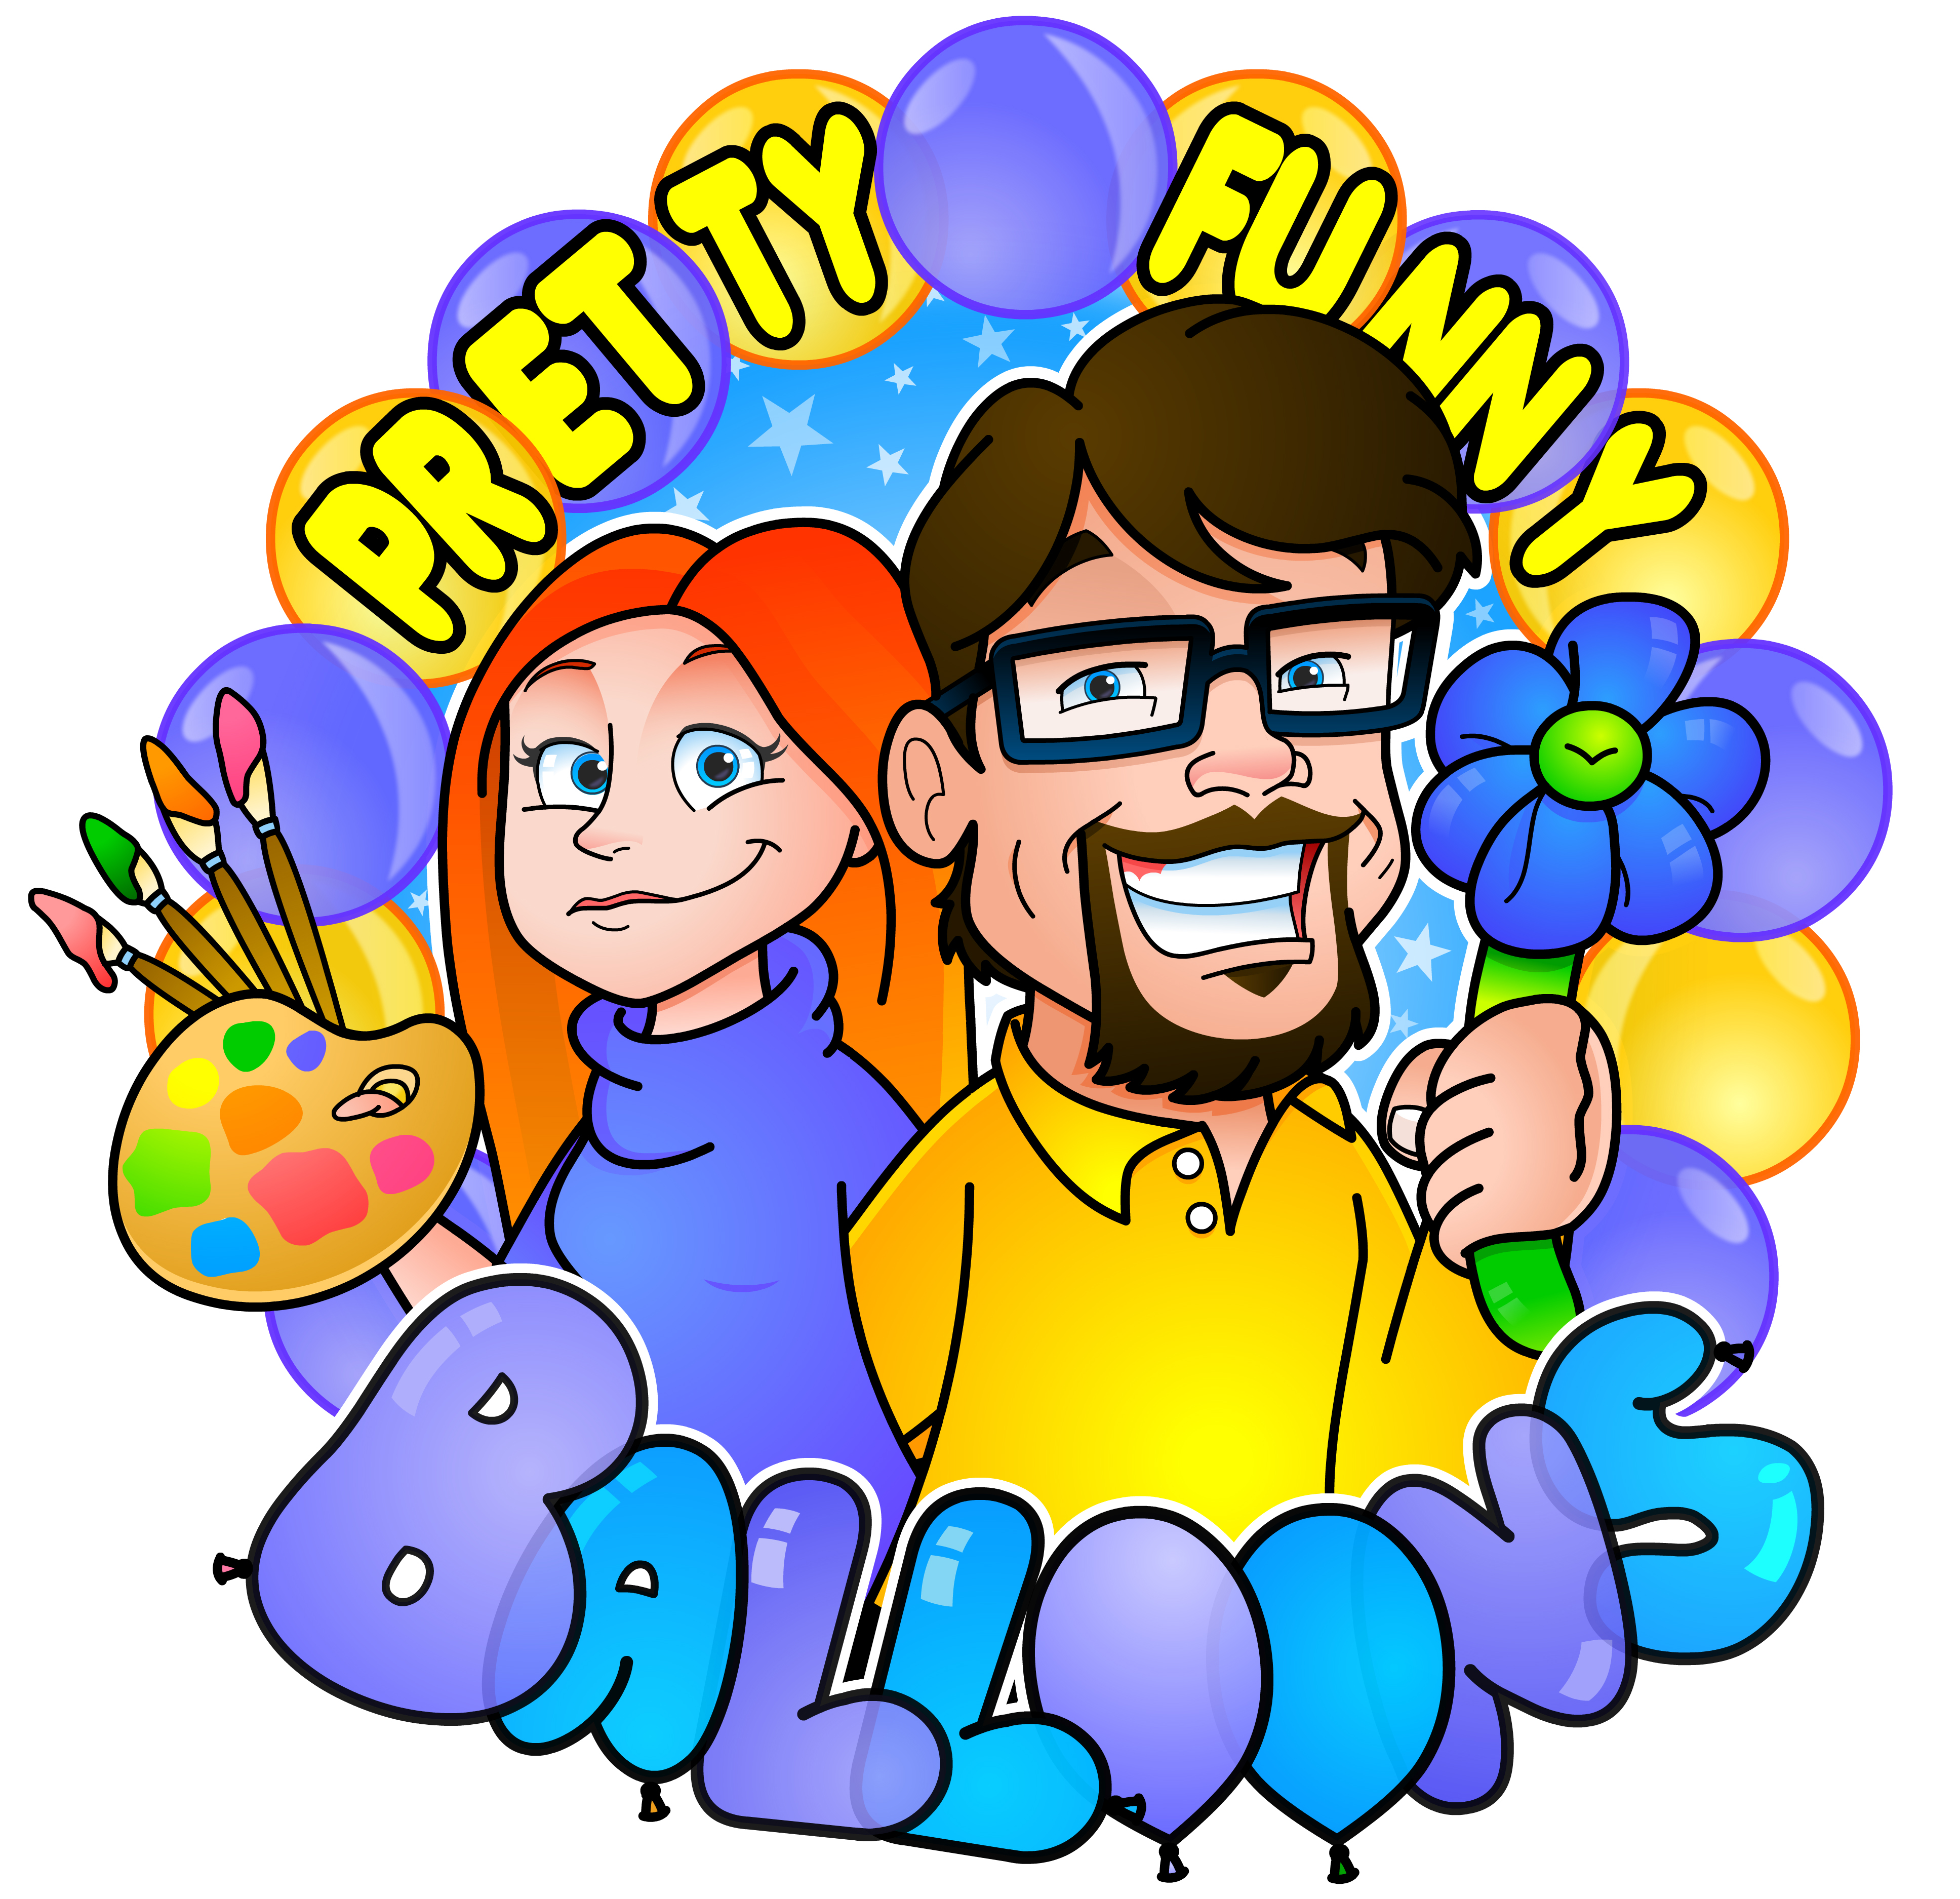 Image of Pretty Funny Balloons logo.